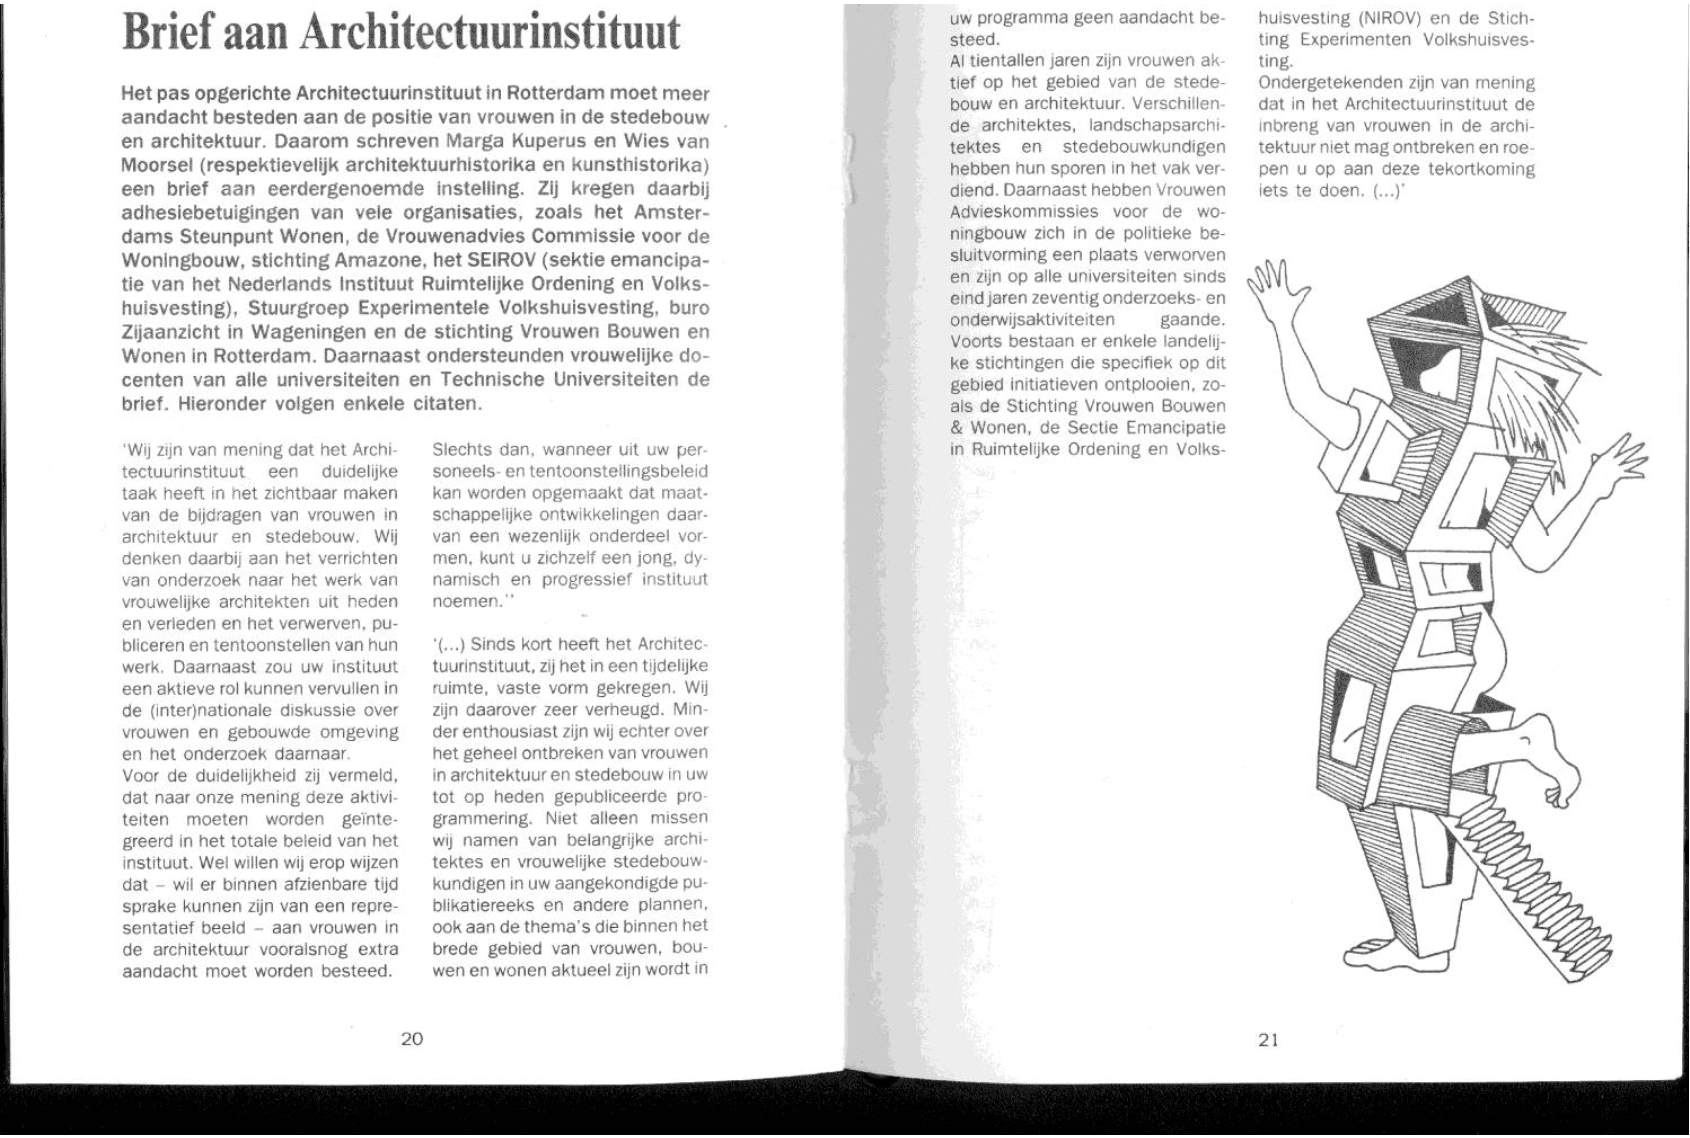 “Letter to the Architecture Instituut Rotterdam”, Bullitin, Vrouwen Bowen en Wonen network, 1989 